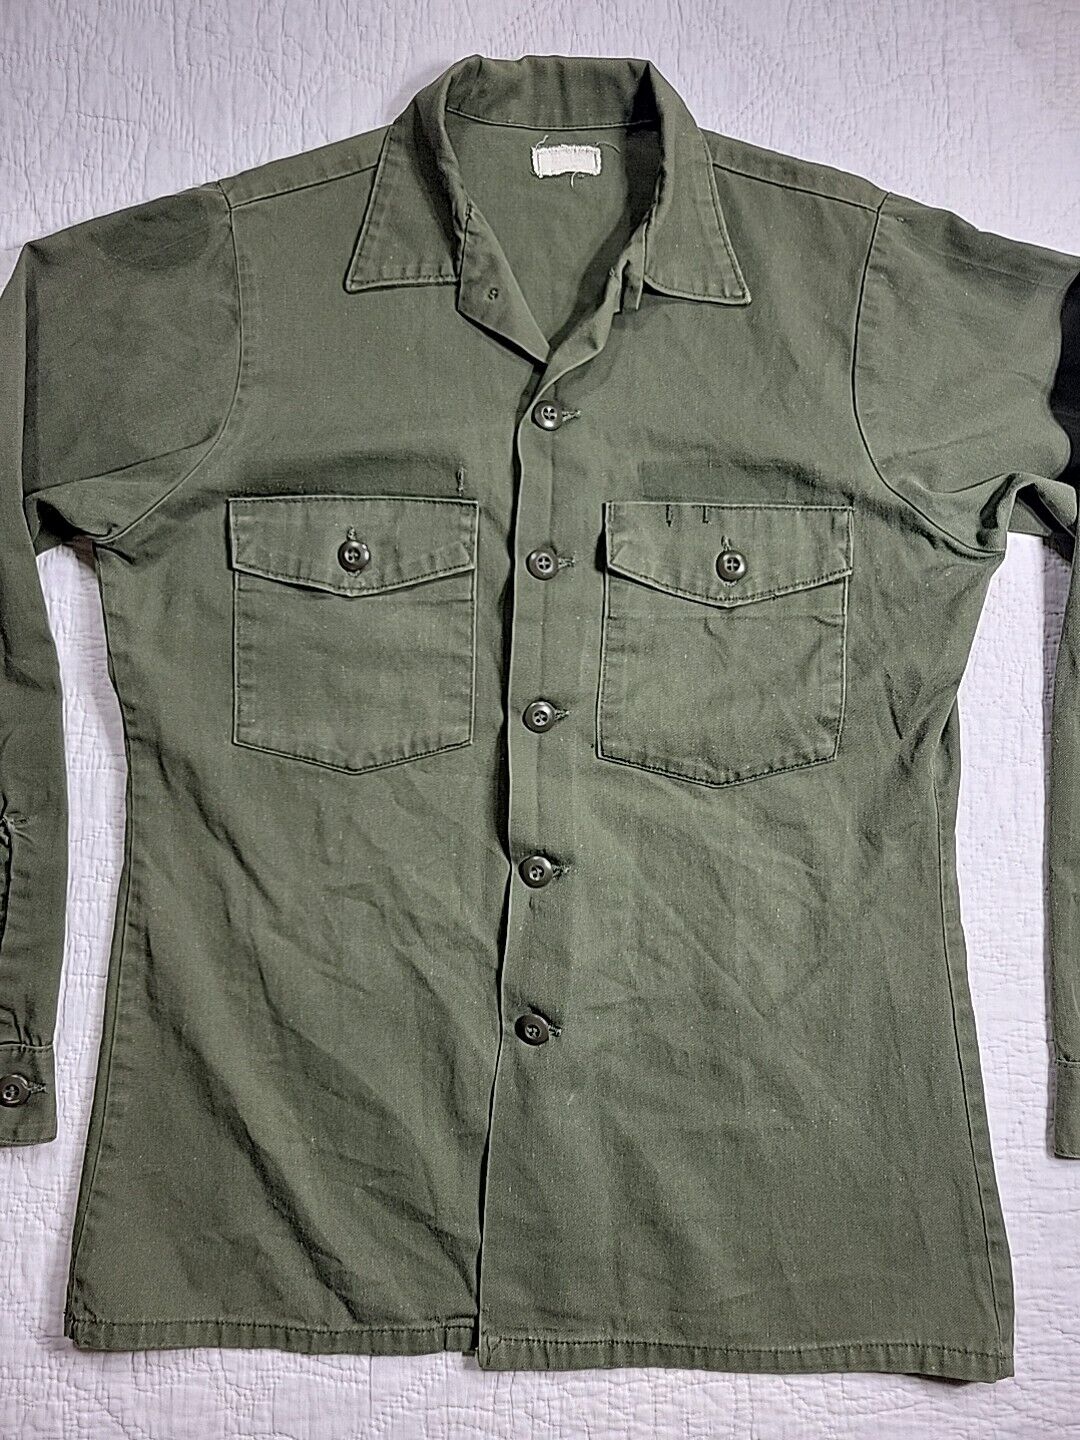 Vintage US Army Vietnam Era OG-507 Fatigue Duty Shirt Size Medium 15.5x35 Selma